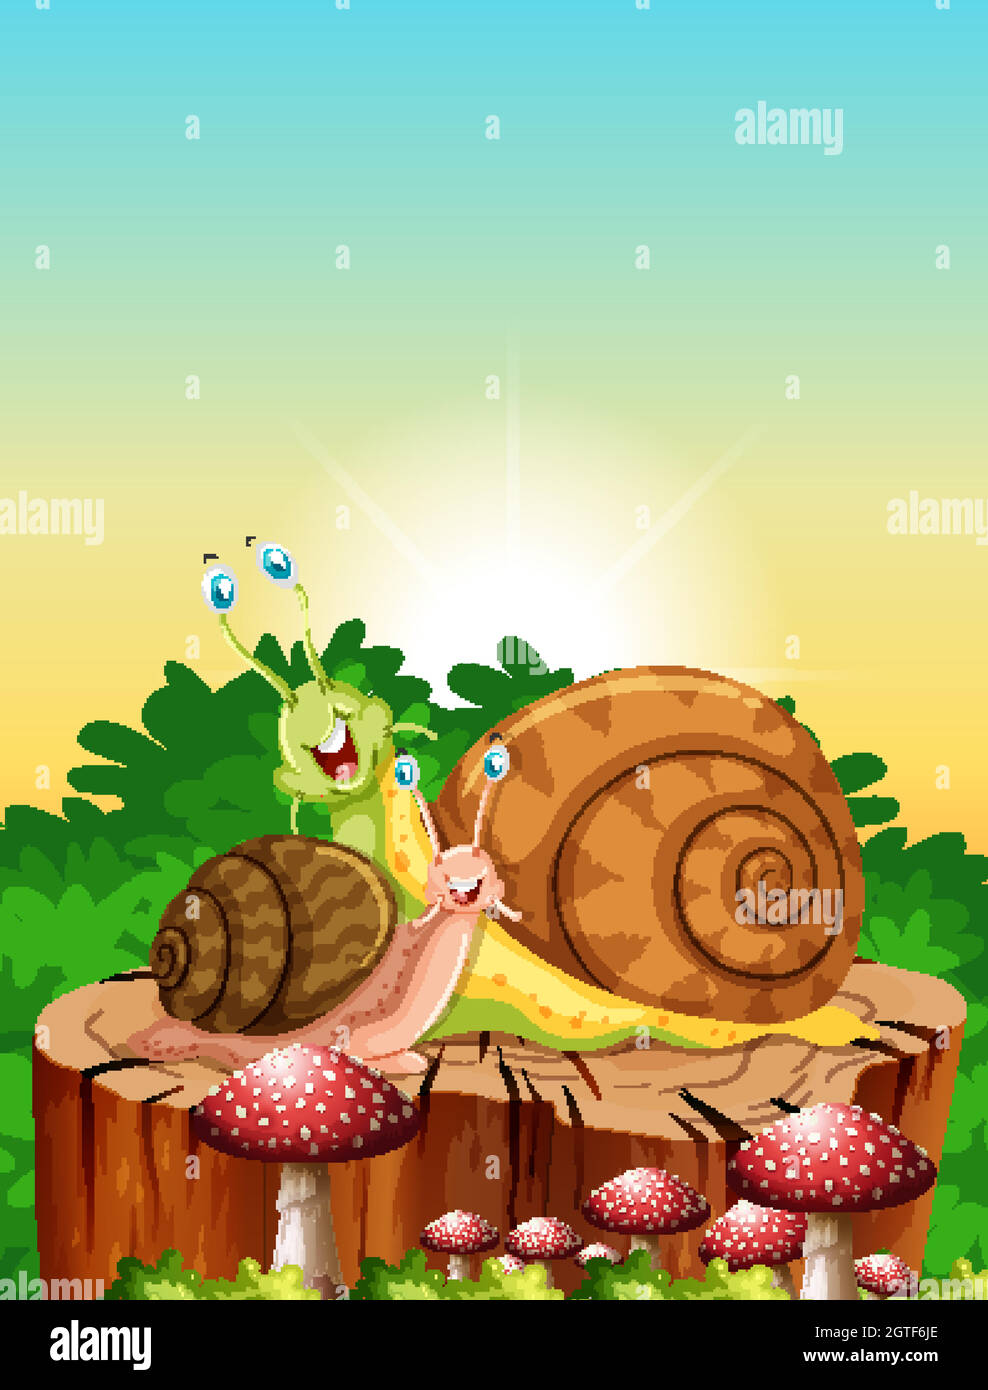 Two snails living in the garden scene at daytime Stock Vector